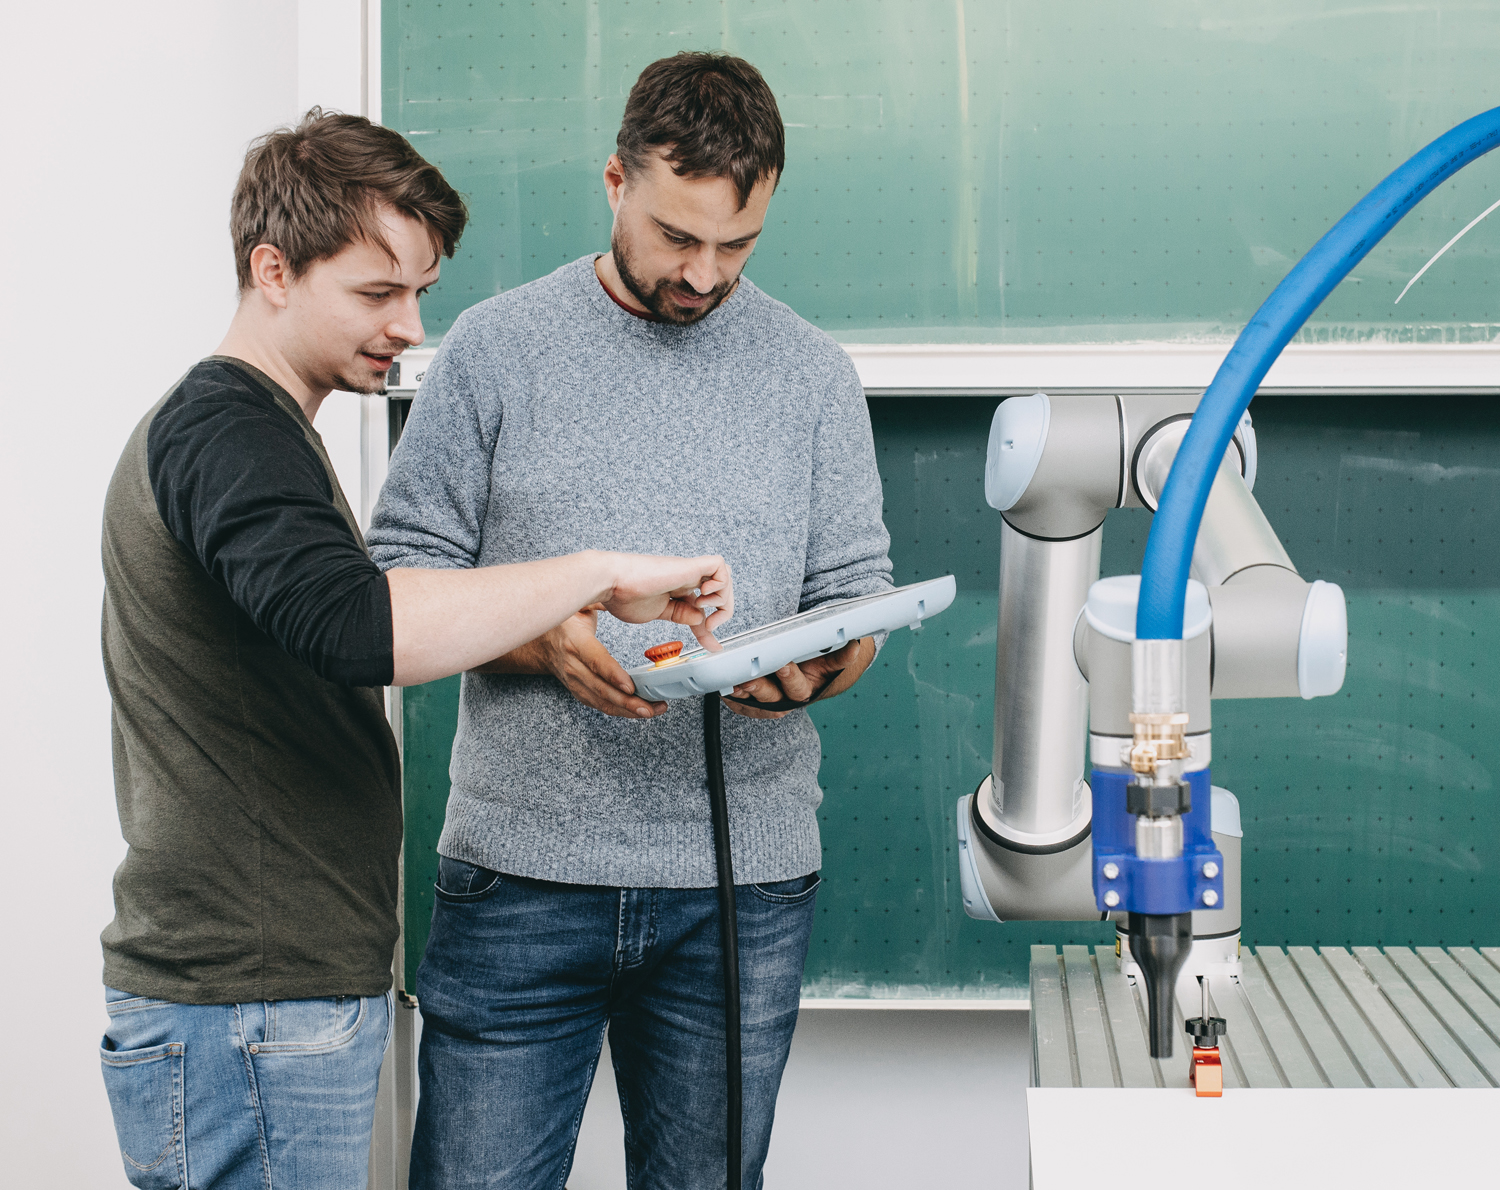 Robotik ist Teil der Ausbildung im neuen Bachelorstudiengang Digitaler Baumeister an der Hochschule Augsburg